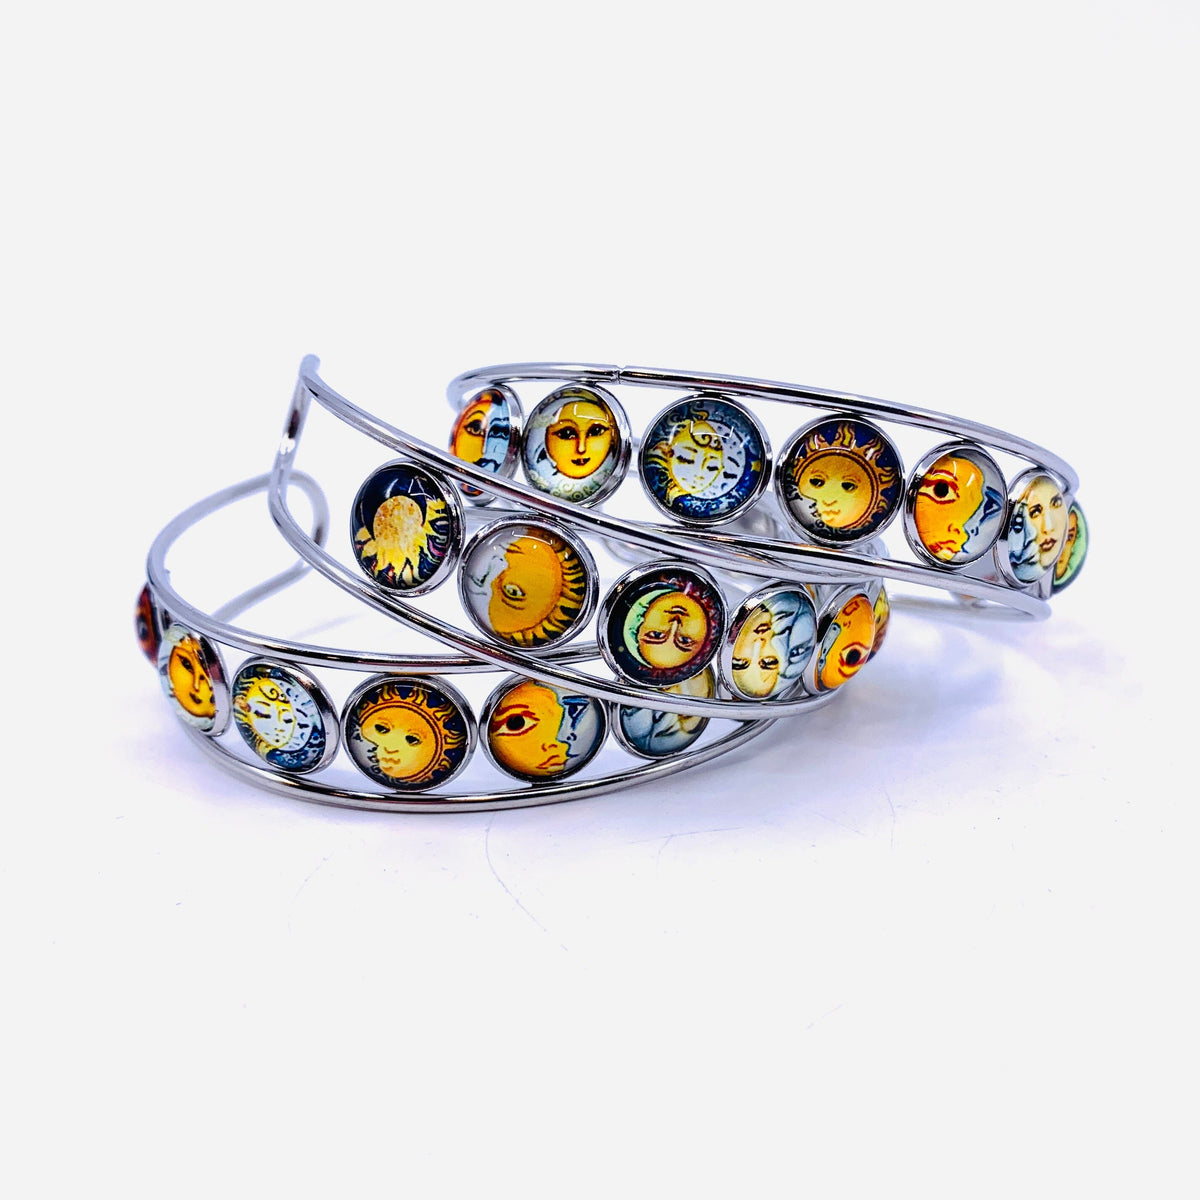 Artistic Cuff Bracelet Jewelry - Sun and Moon 